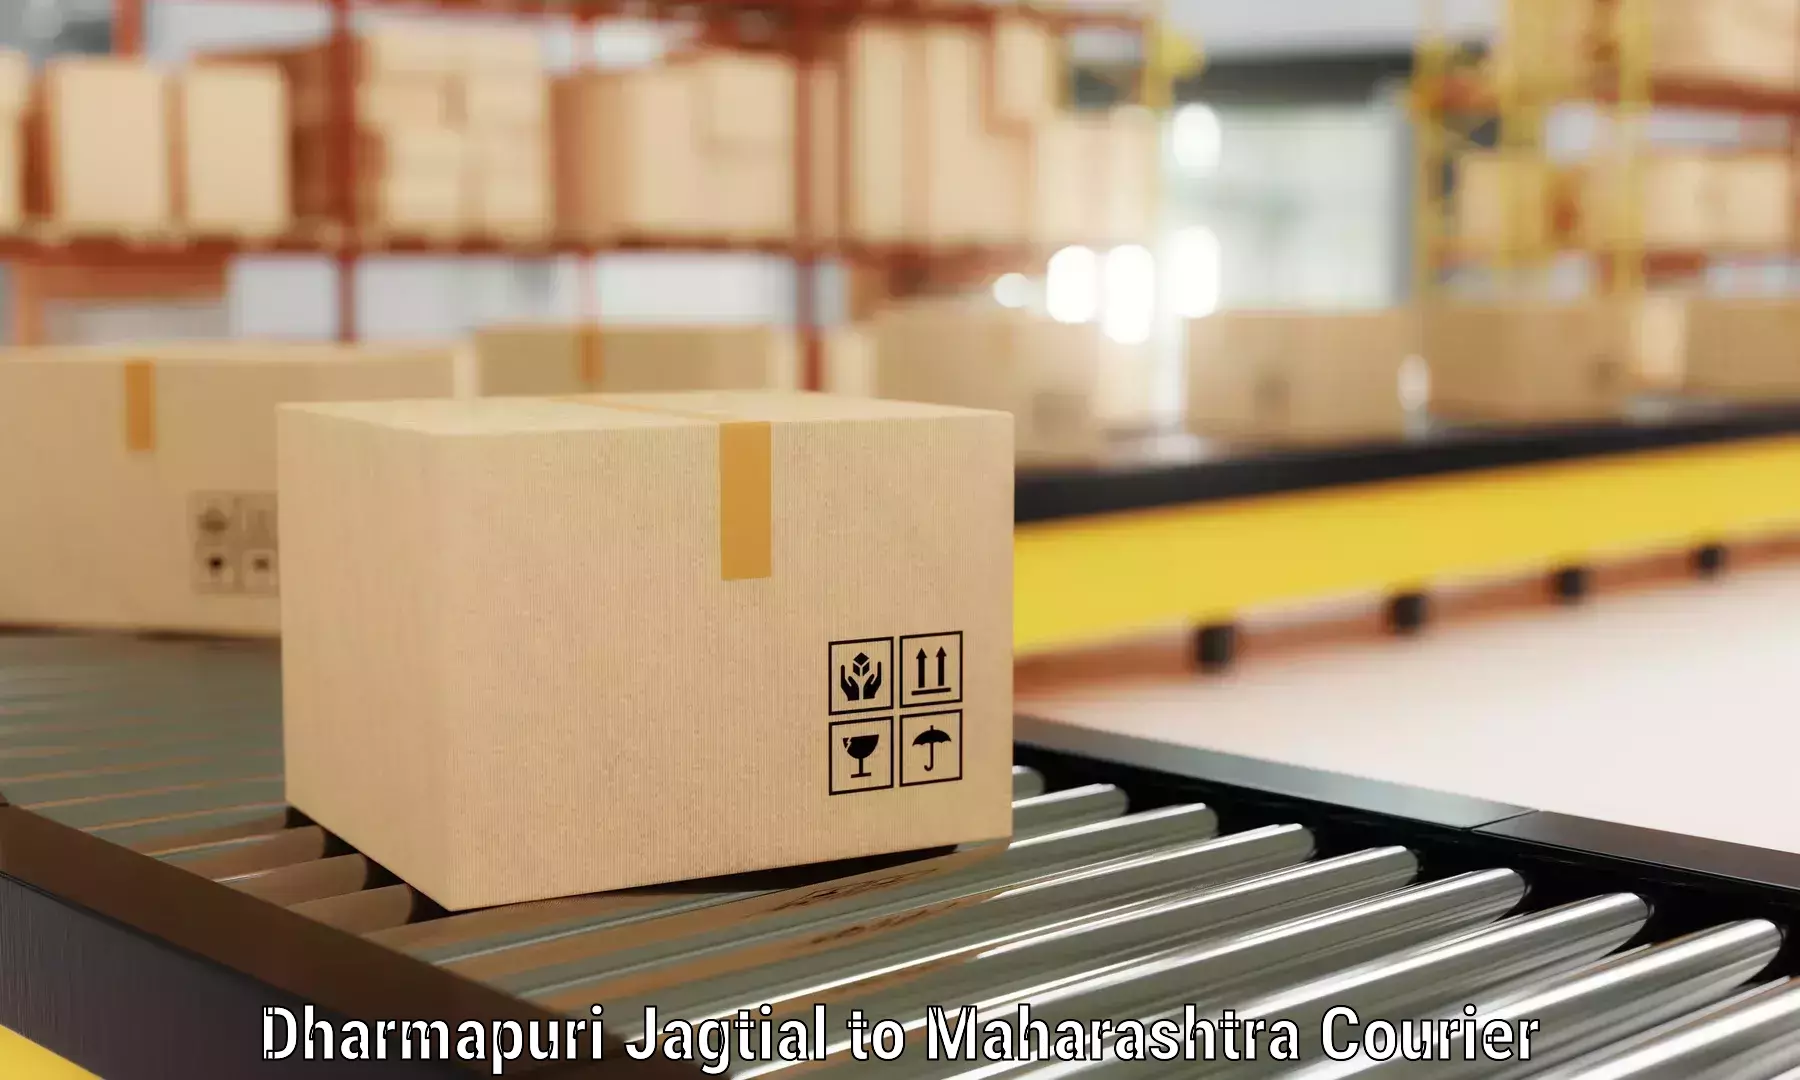 Moving and handling services Dharmapuri Jagtial to Ulhasnagar